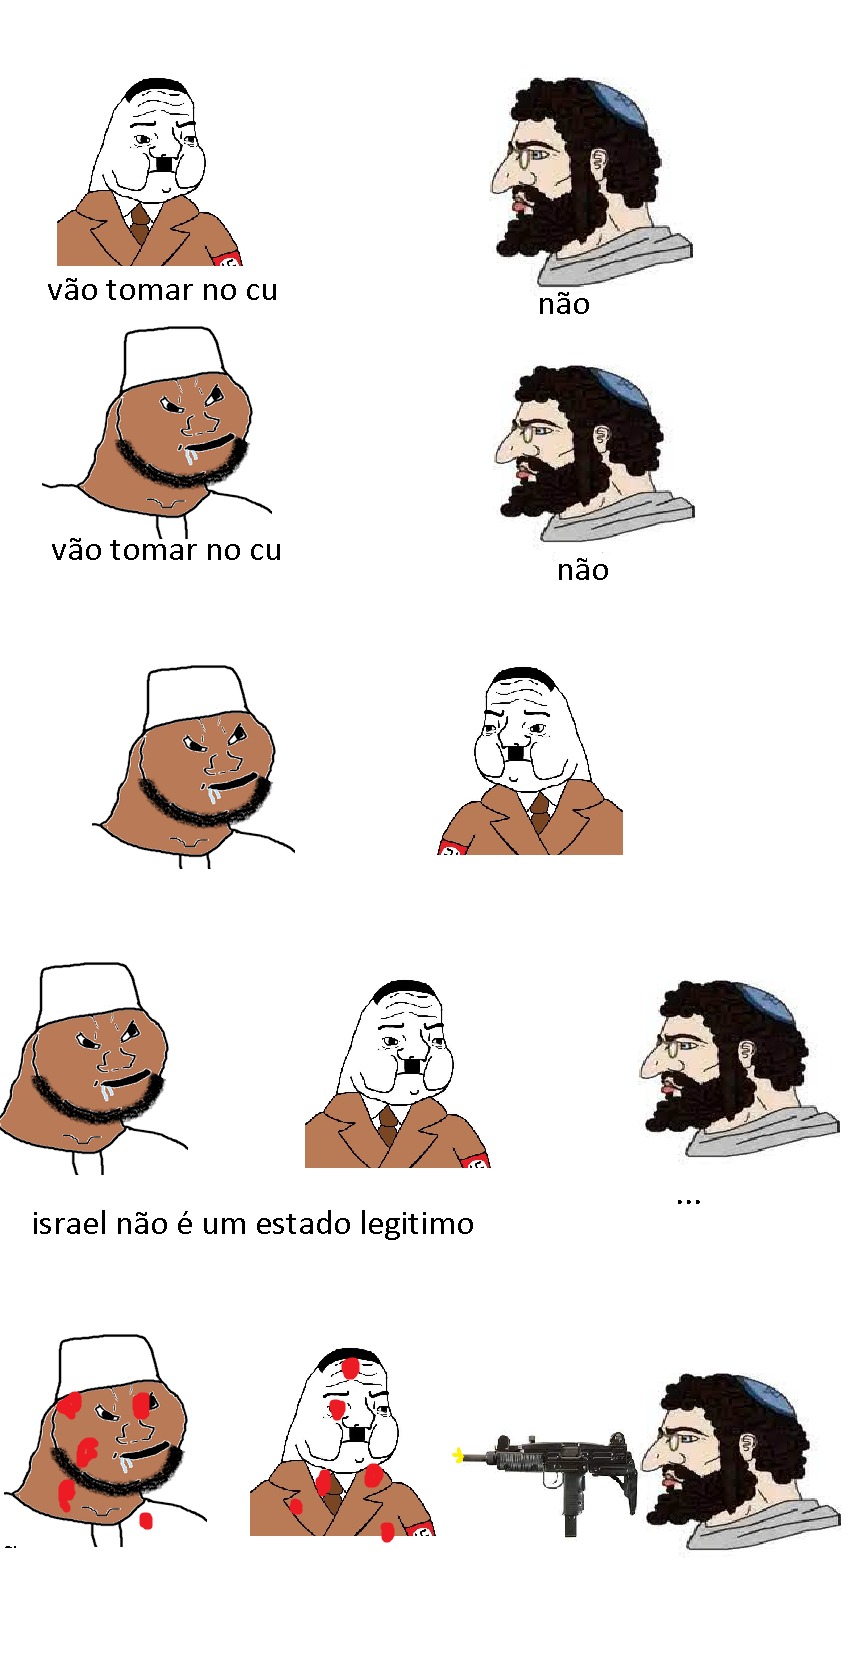 israel é e sempre será legitimo - meme